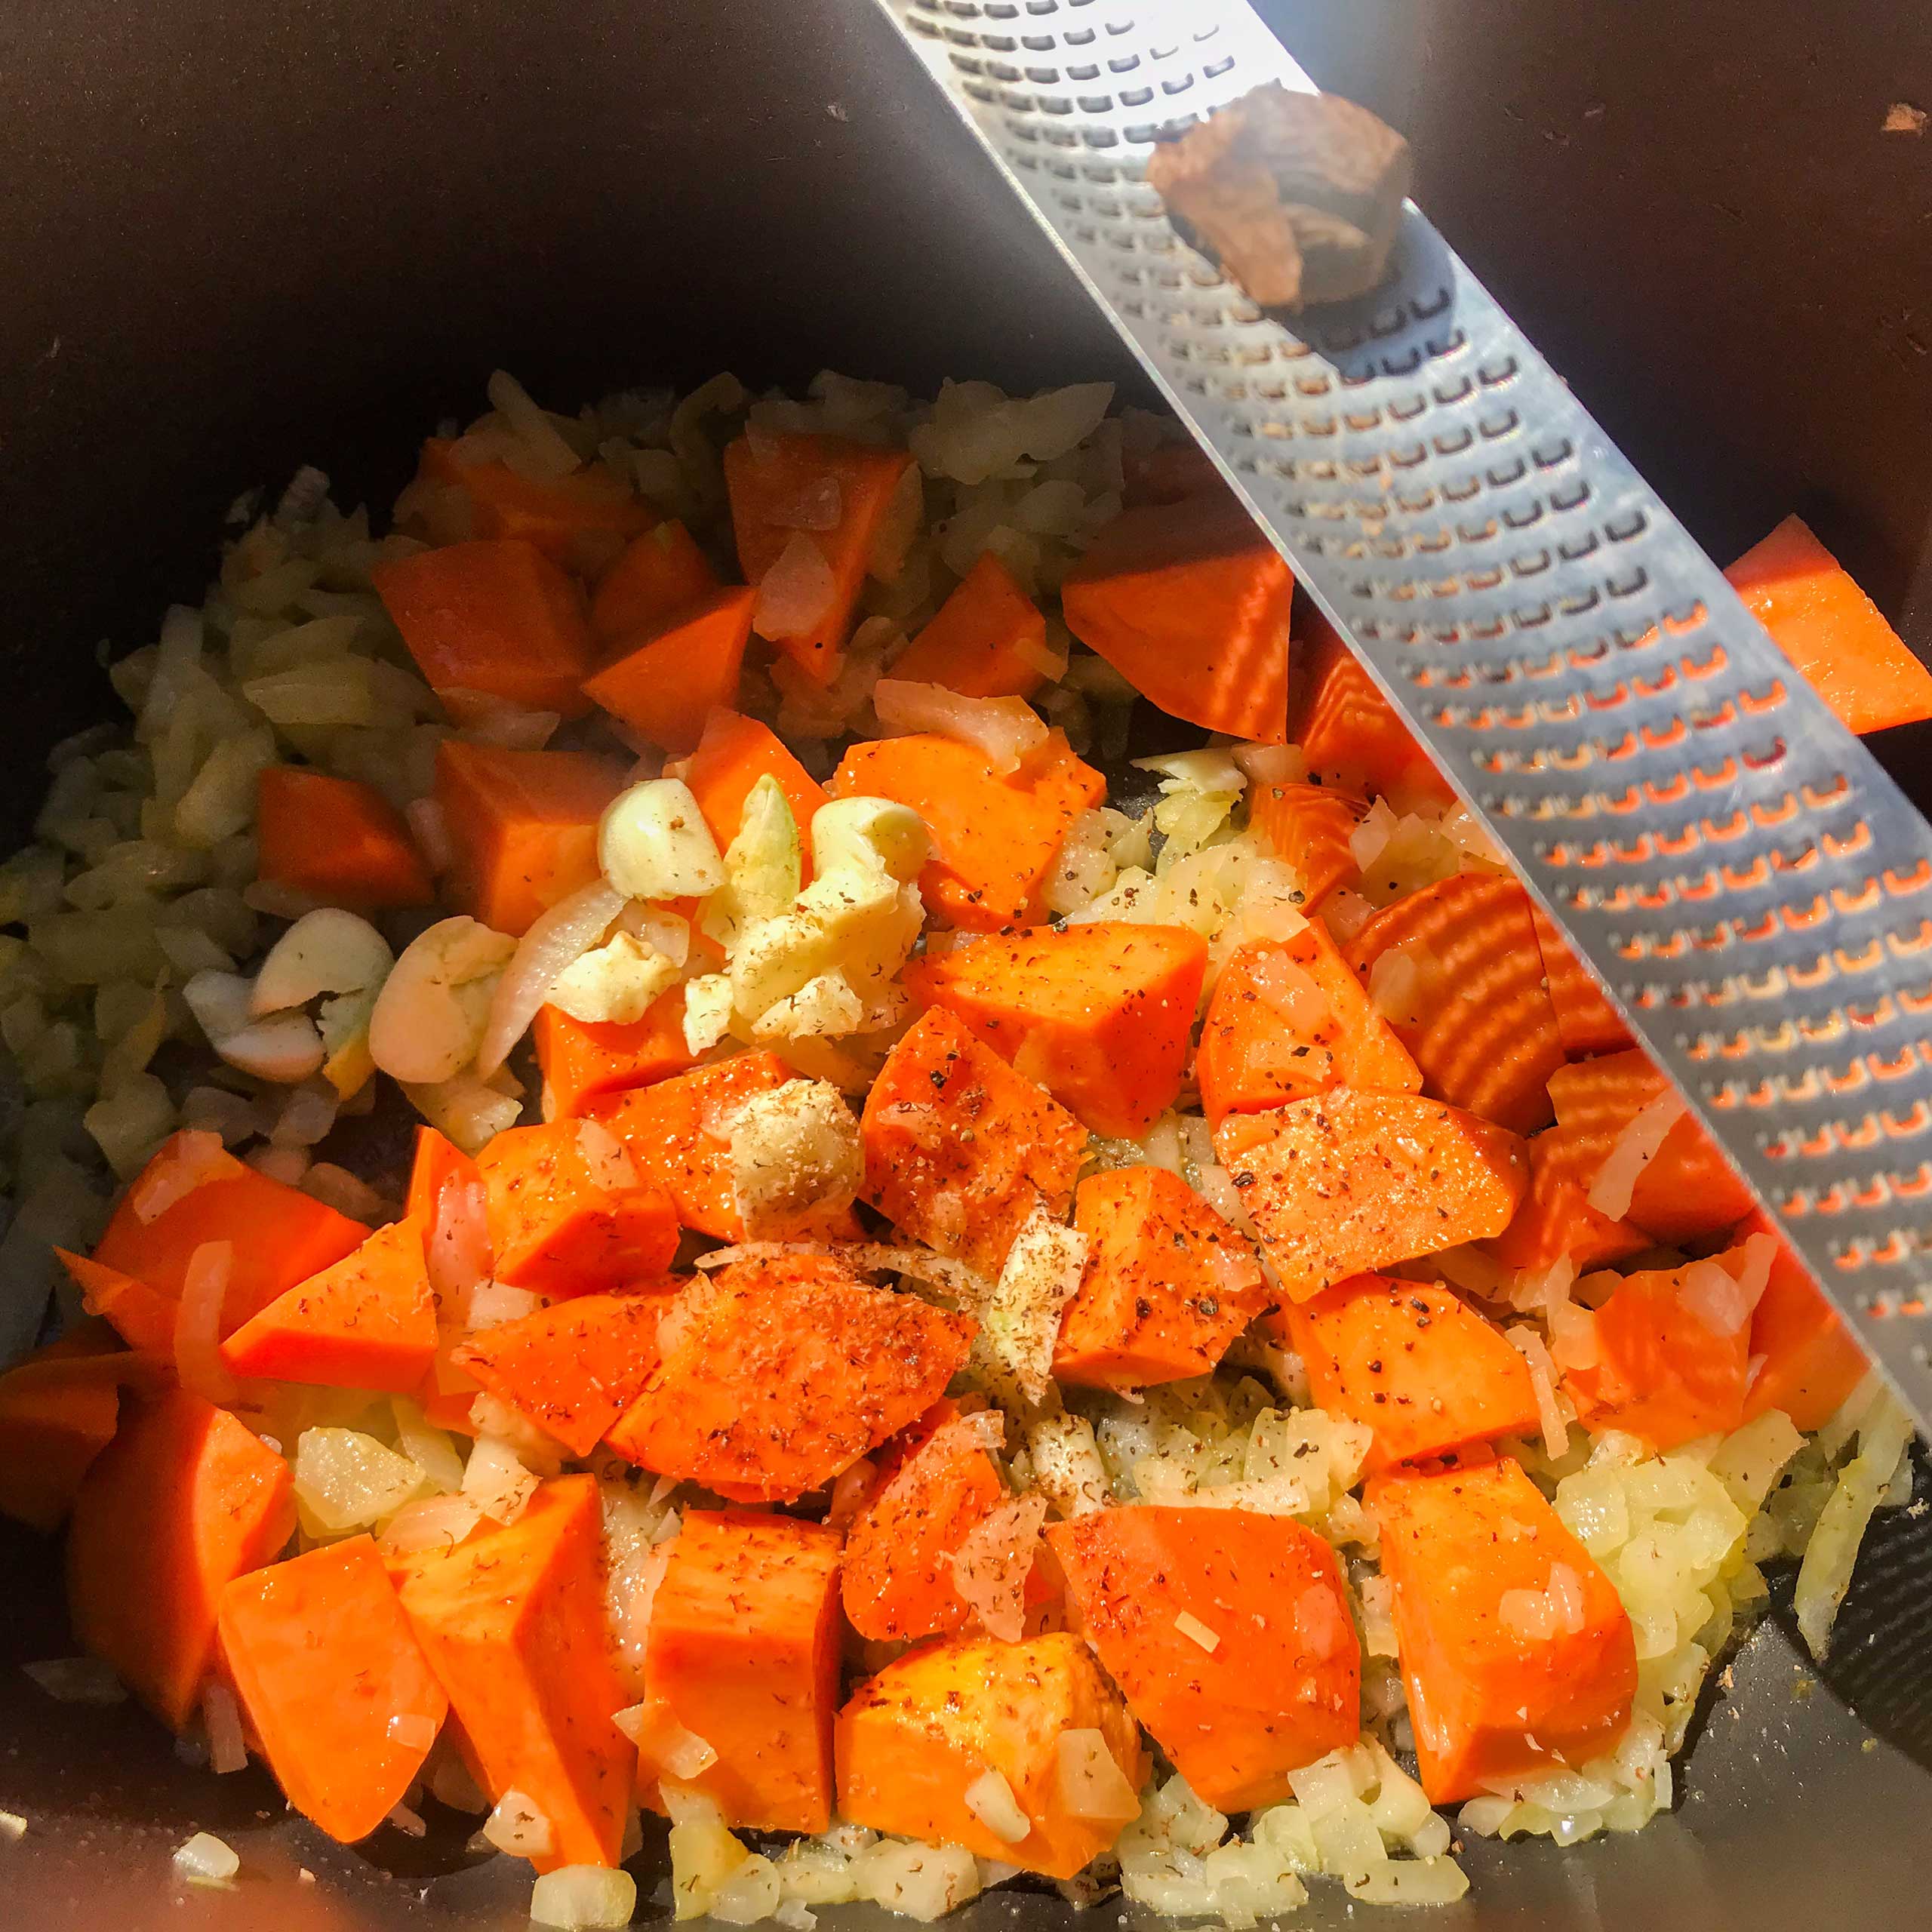 veggies and seasonings in a pot.